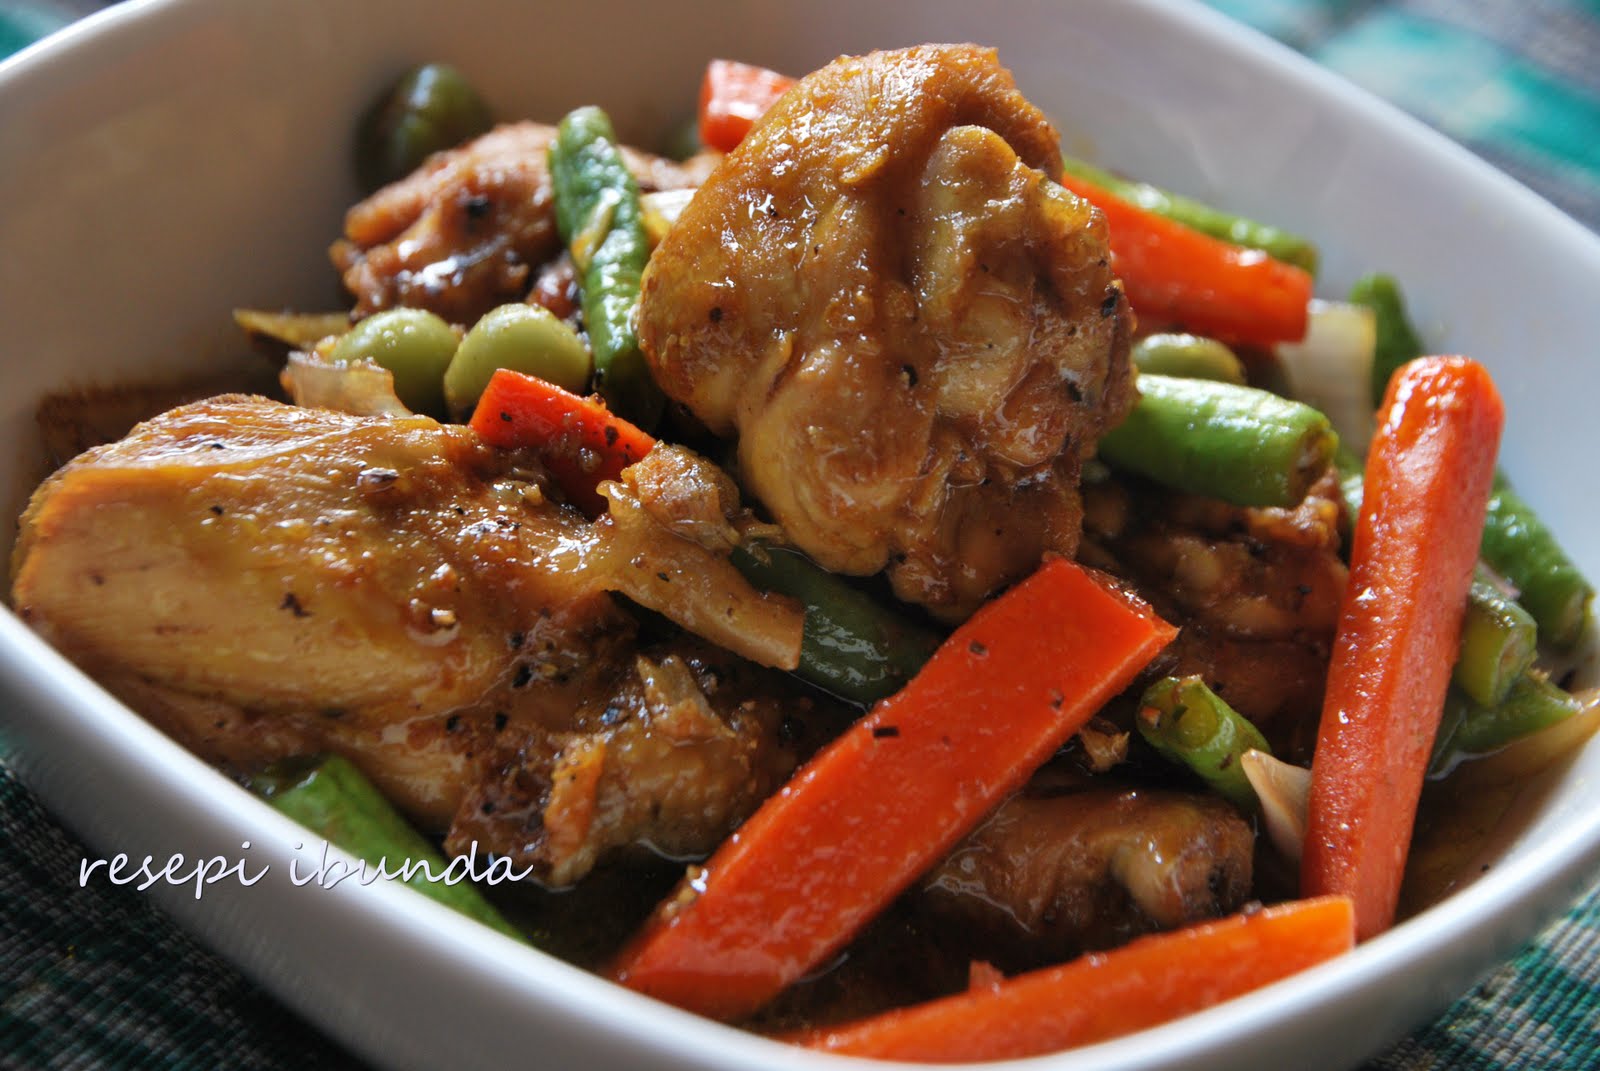 Secubit rahsia @ Secukup rasa: Ayam masak lada hitam 